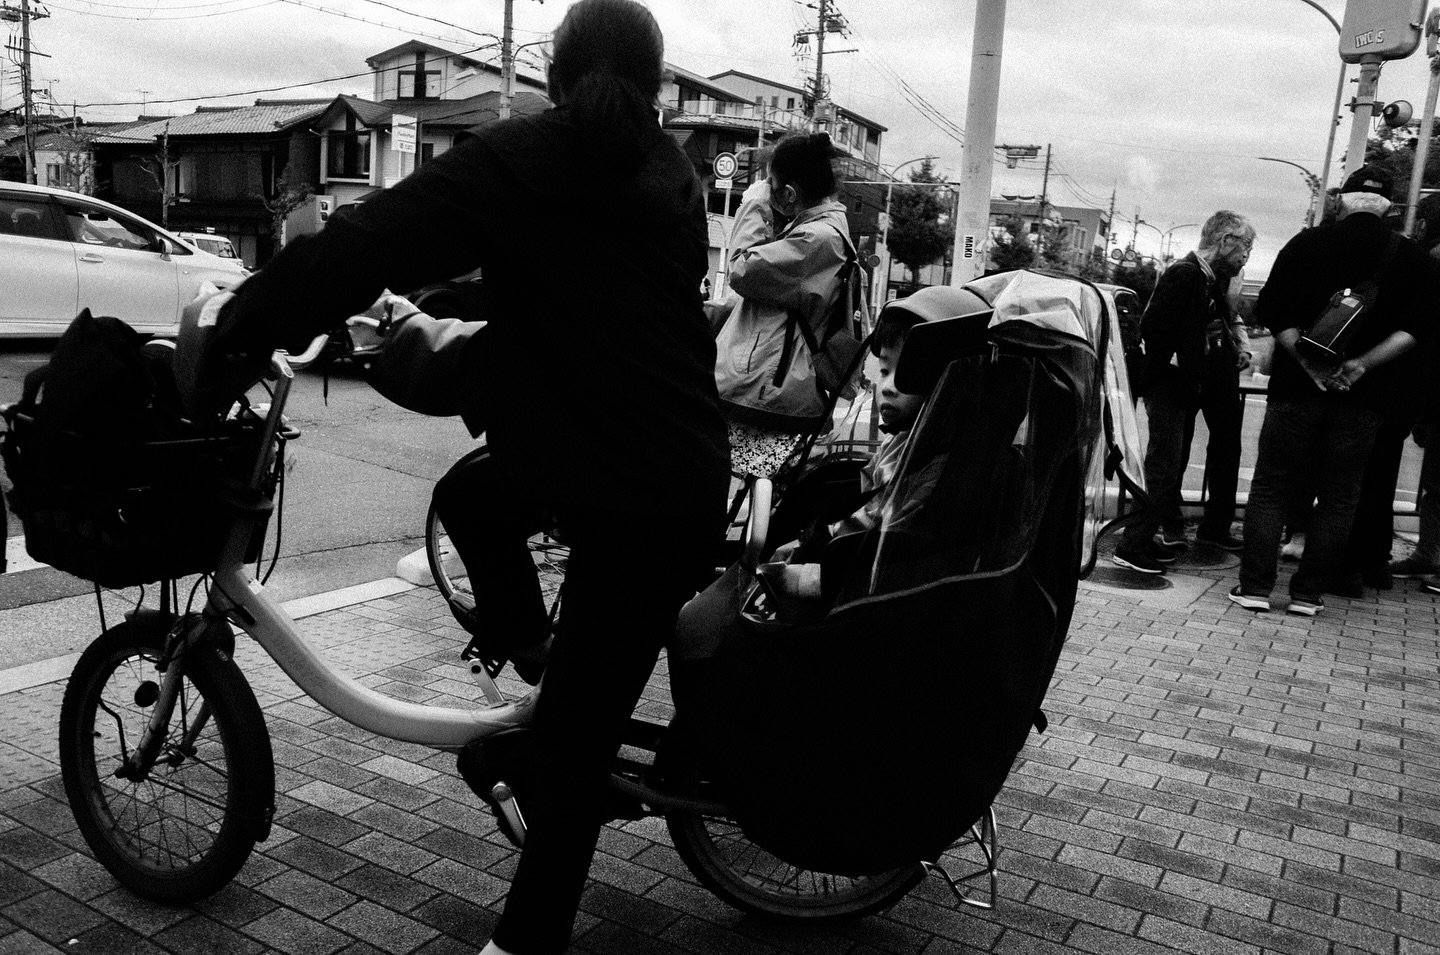 Kyoto. April 2024
.
.
.
.
.
. 
#streetphotography #streetsnap #filmpgotography #myfeatureshoot #everybodystreet #spicollective #worldstreetfeature  #voidtokyo #bnw #blackandwhite #myspc #bnw_captures #写真好きな人と繋がりたい #写真 #bnw_greatshots #london #ricohg